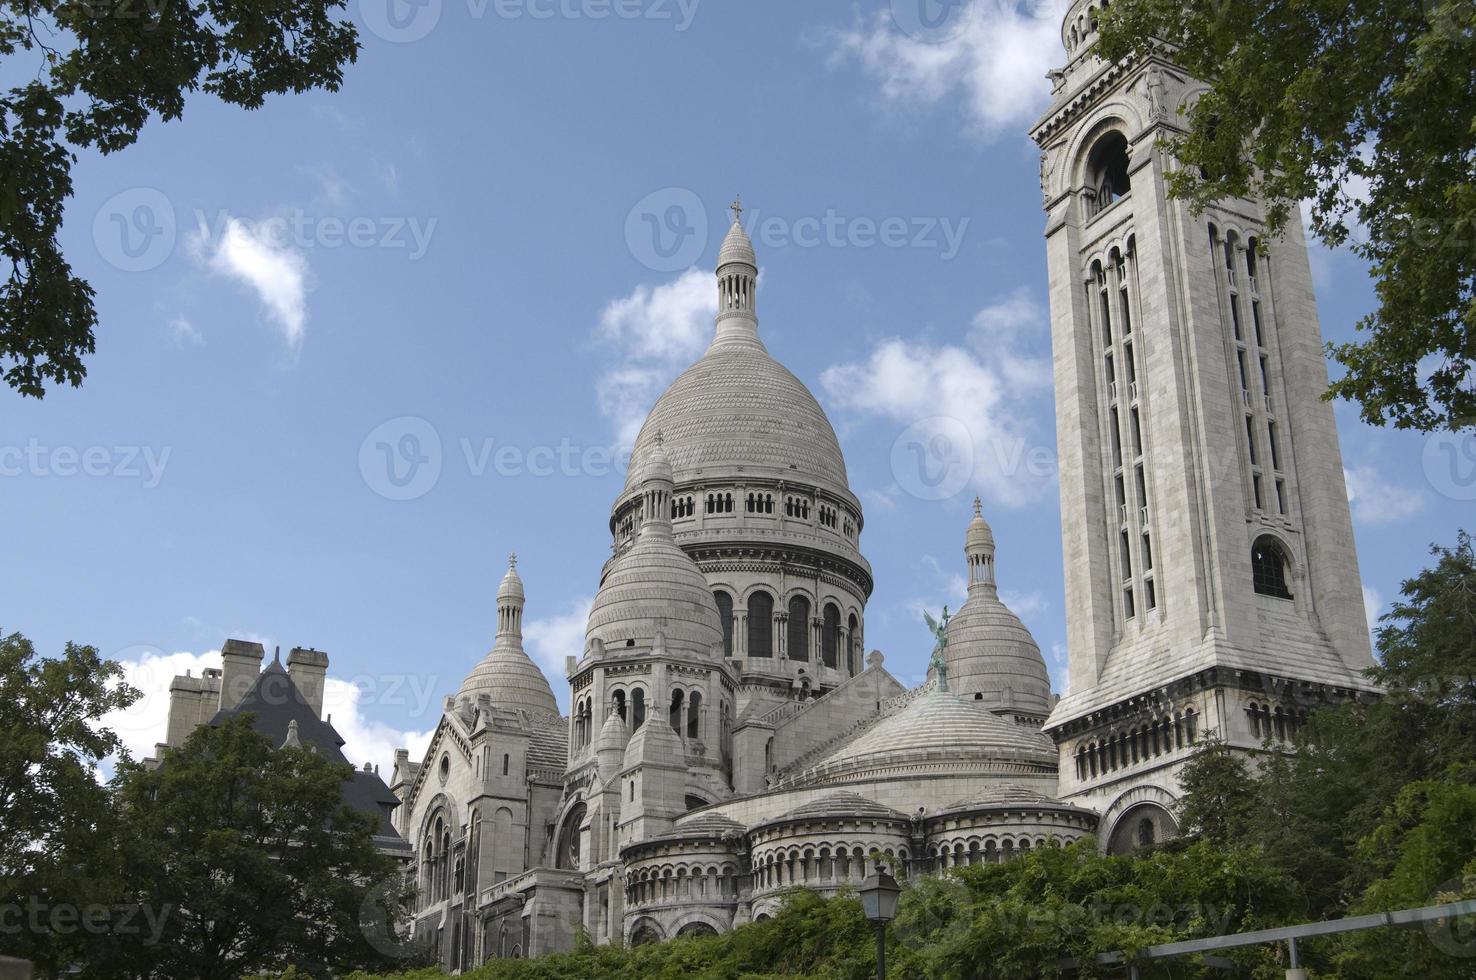 Sacre Coeur em Paris foto